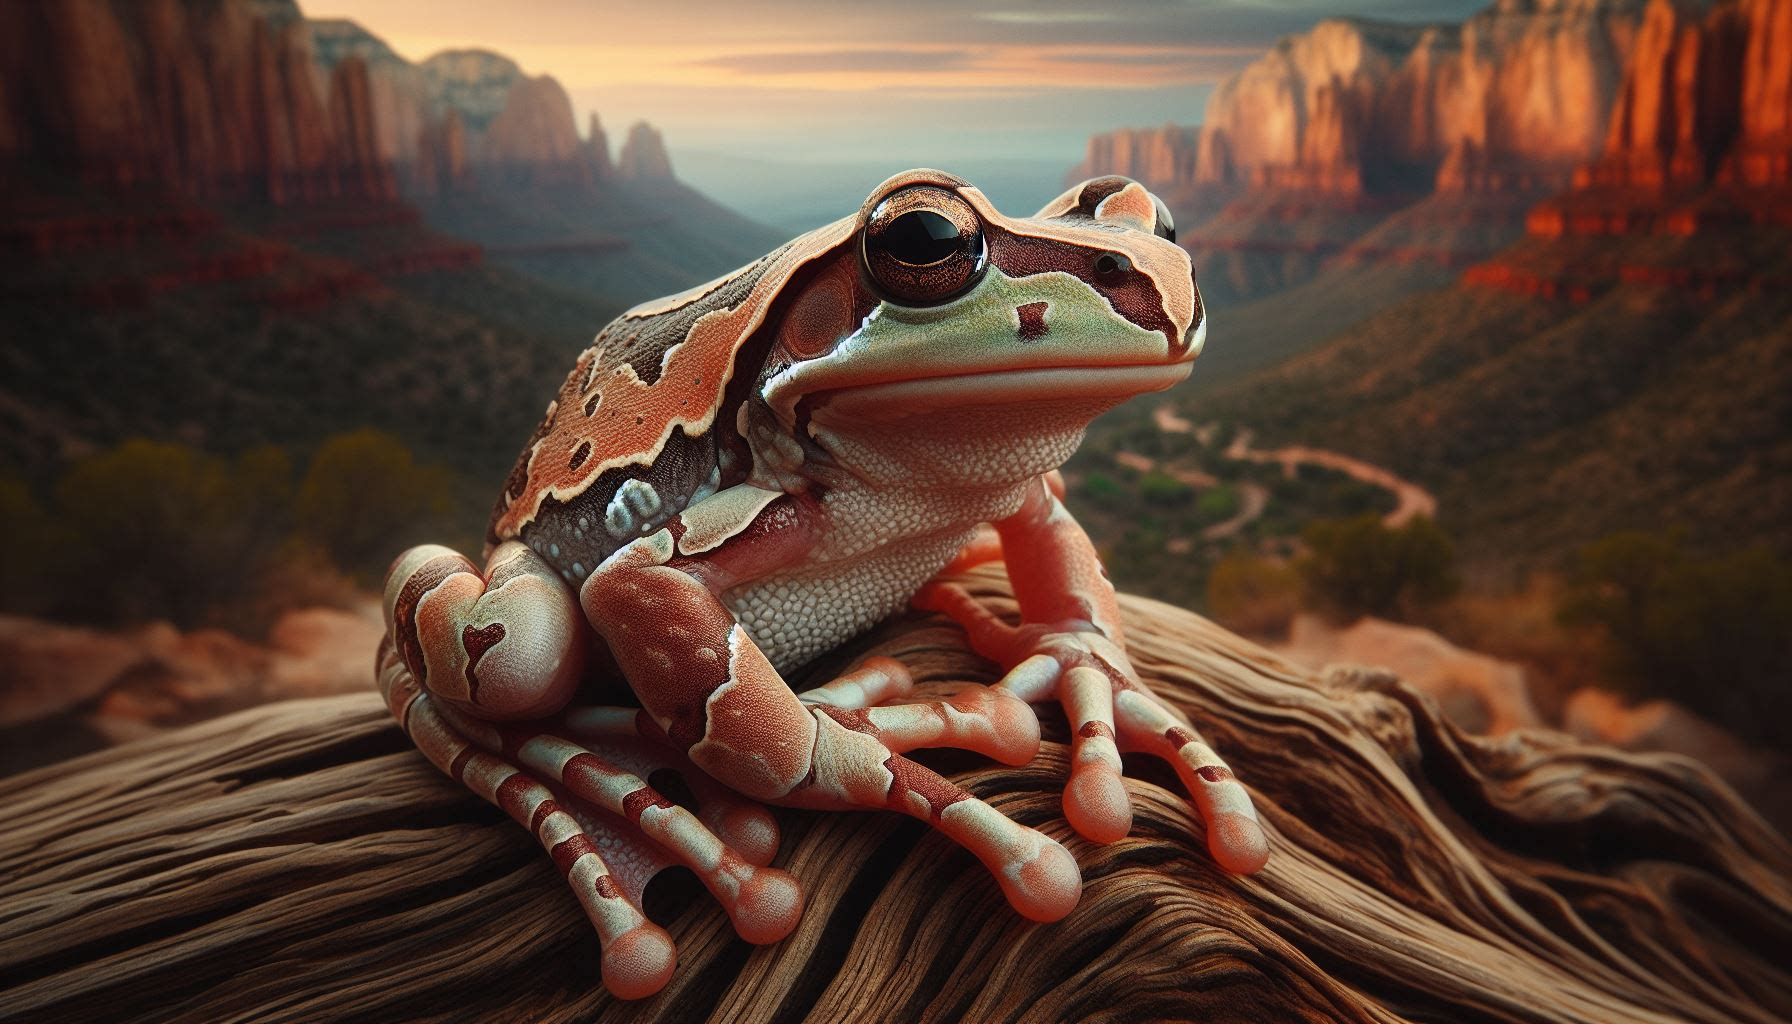 Canyon tree frog